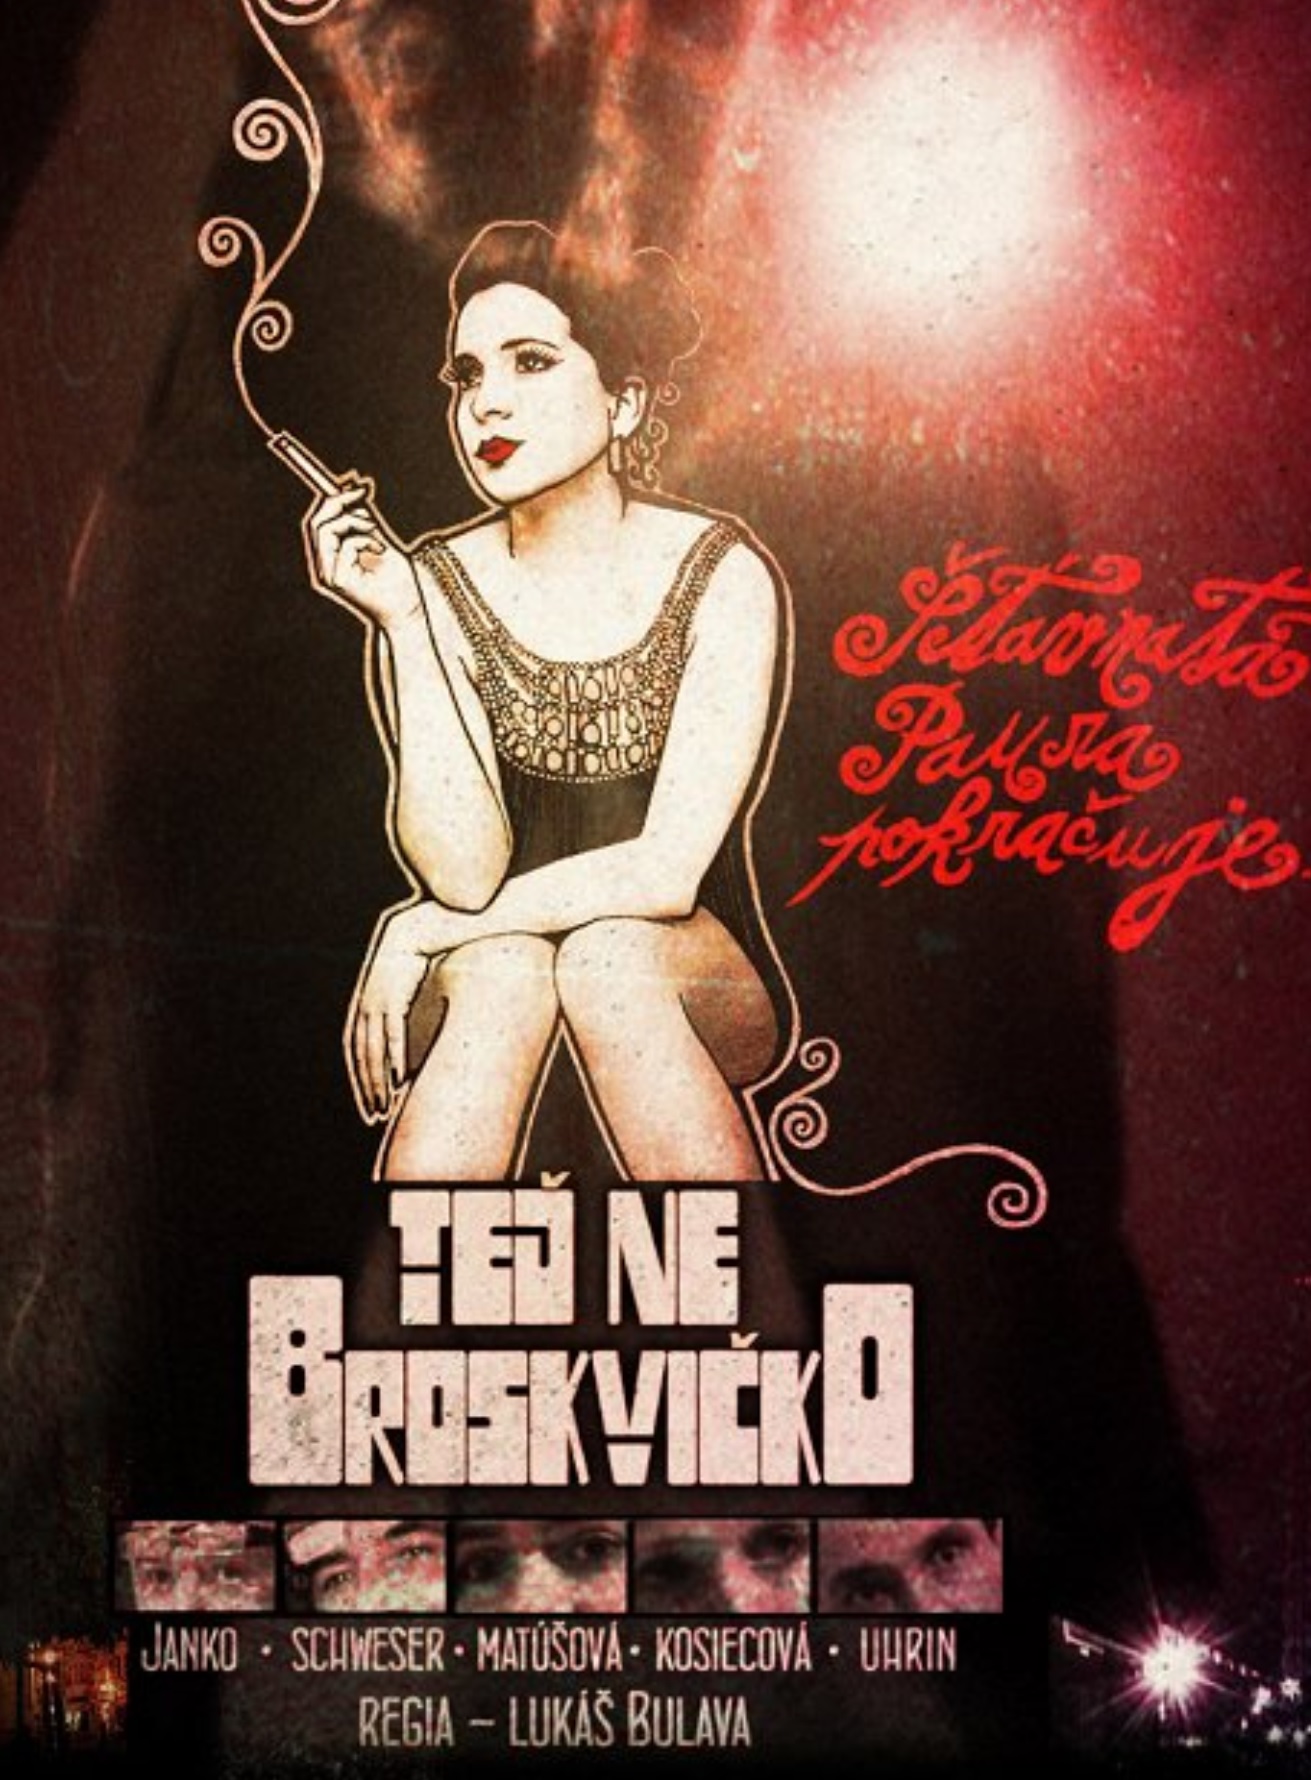 Plakát pro film “Teď ne, Broskvičko”